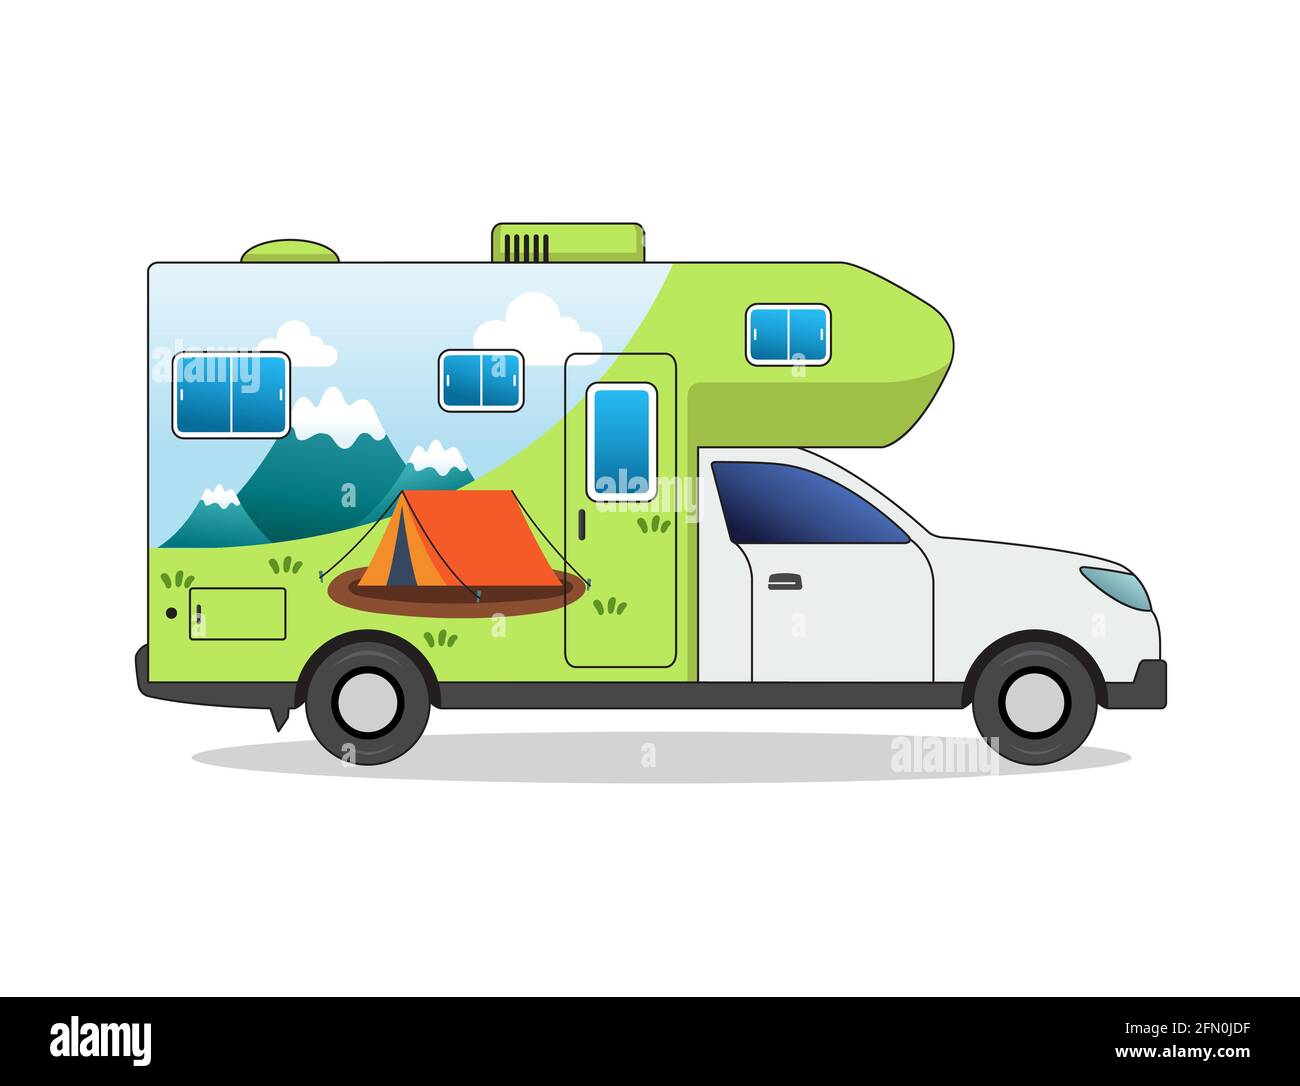 Campingwagen Vektor Illustration von Zelt, Landschaftsbild. Stock Vektor